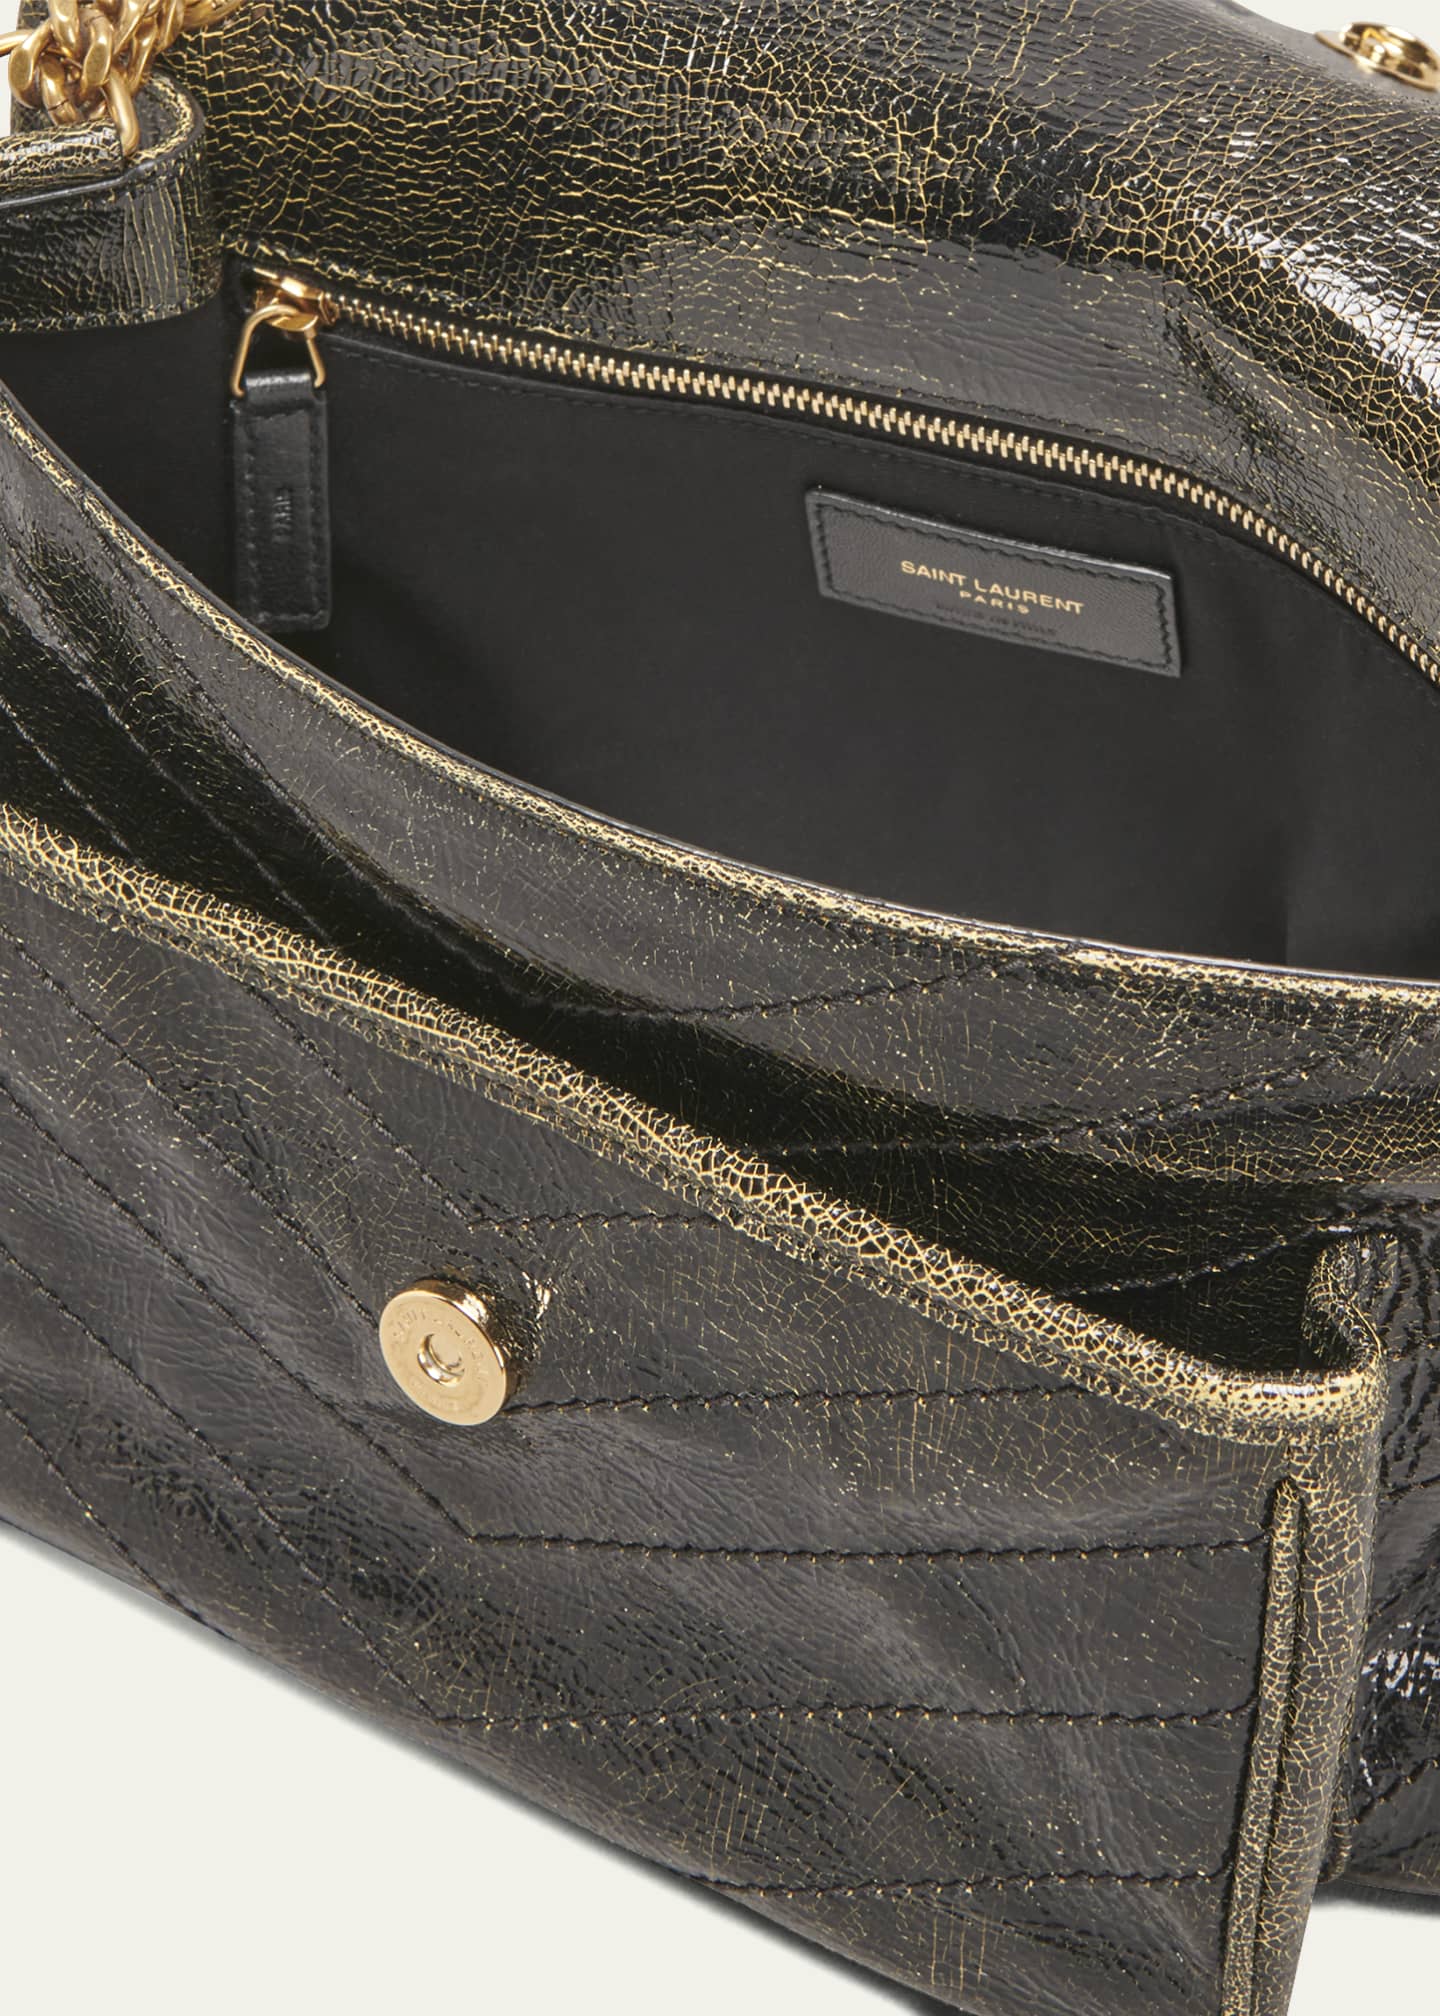 Saint Laurent Medium Monogram YSL Croc-Embossed Shoulder Bag